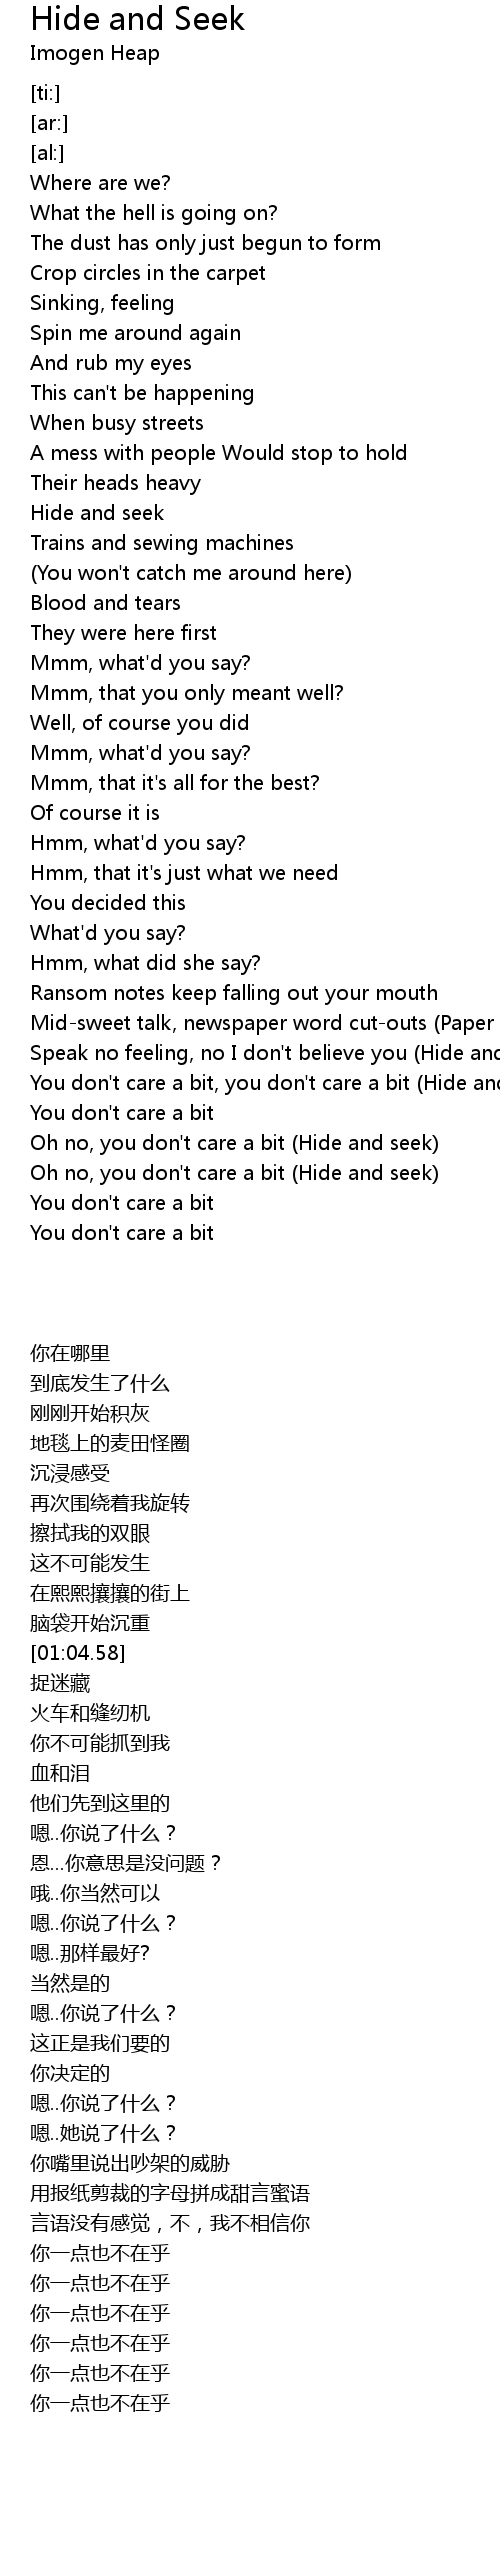 Pixilart - hide and seek lyrics (first minute) (WIP) by themeraldcat